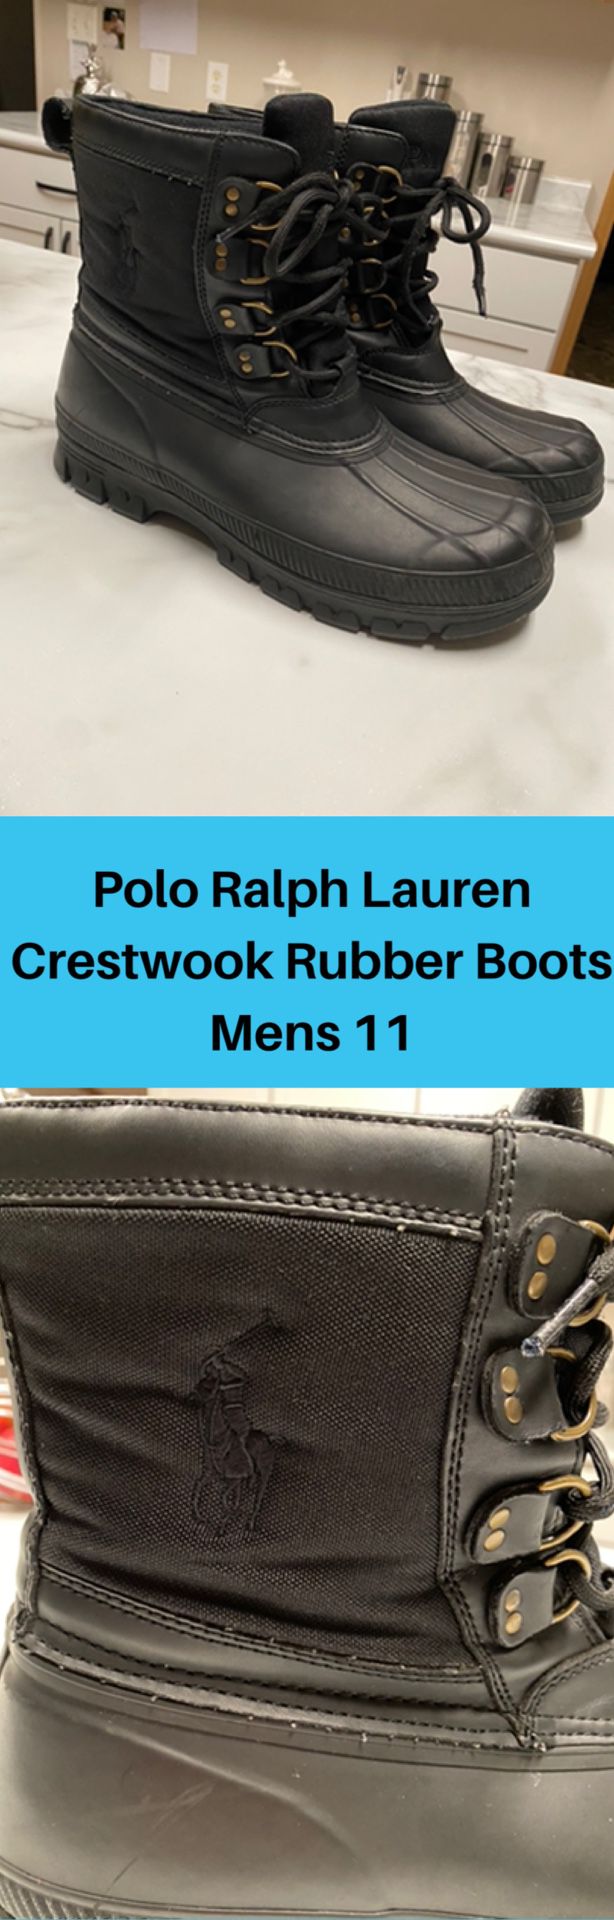 Polo Ralph Lauren Crestwook Rubber Boots Mens 11